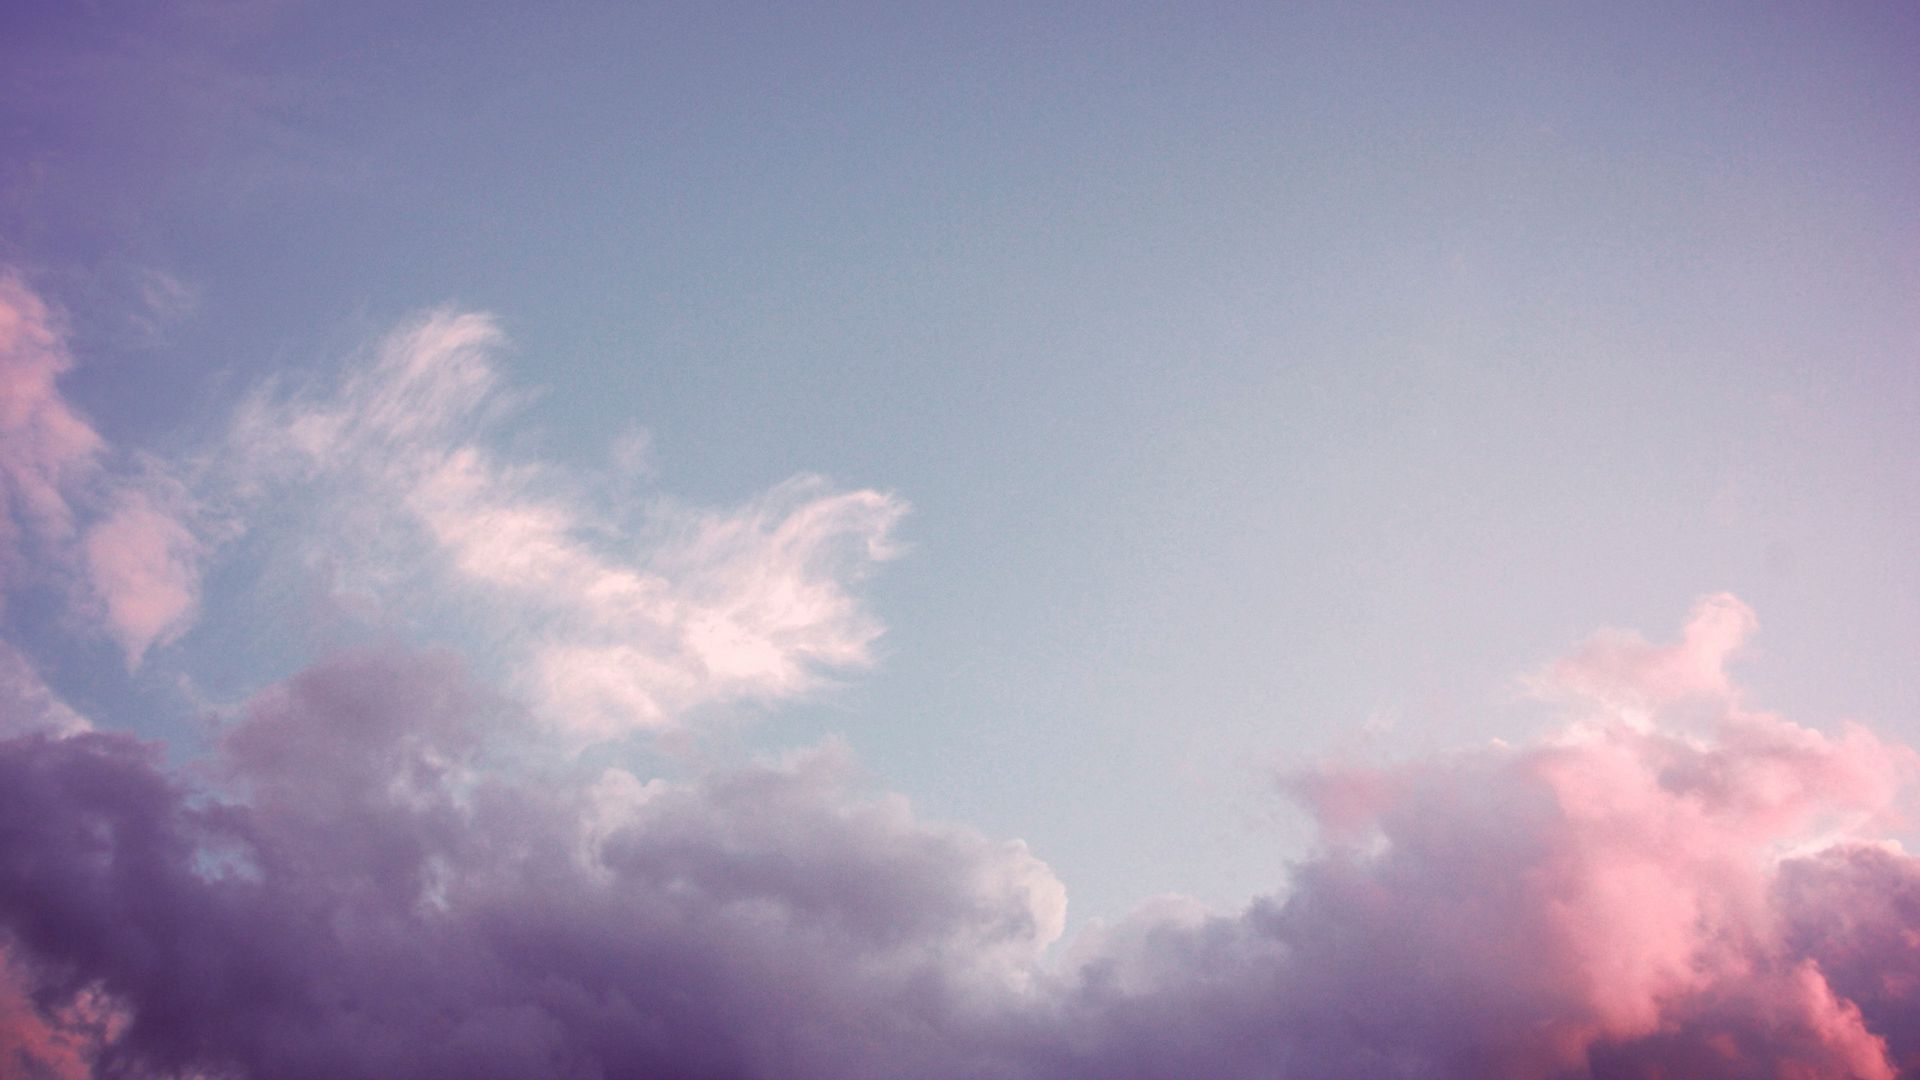 Download wallpaper 1920x1080 sky, clouds, pink full hd, hdtv, fhd